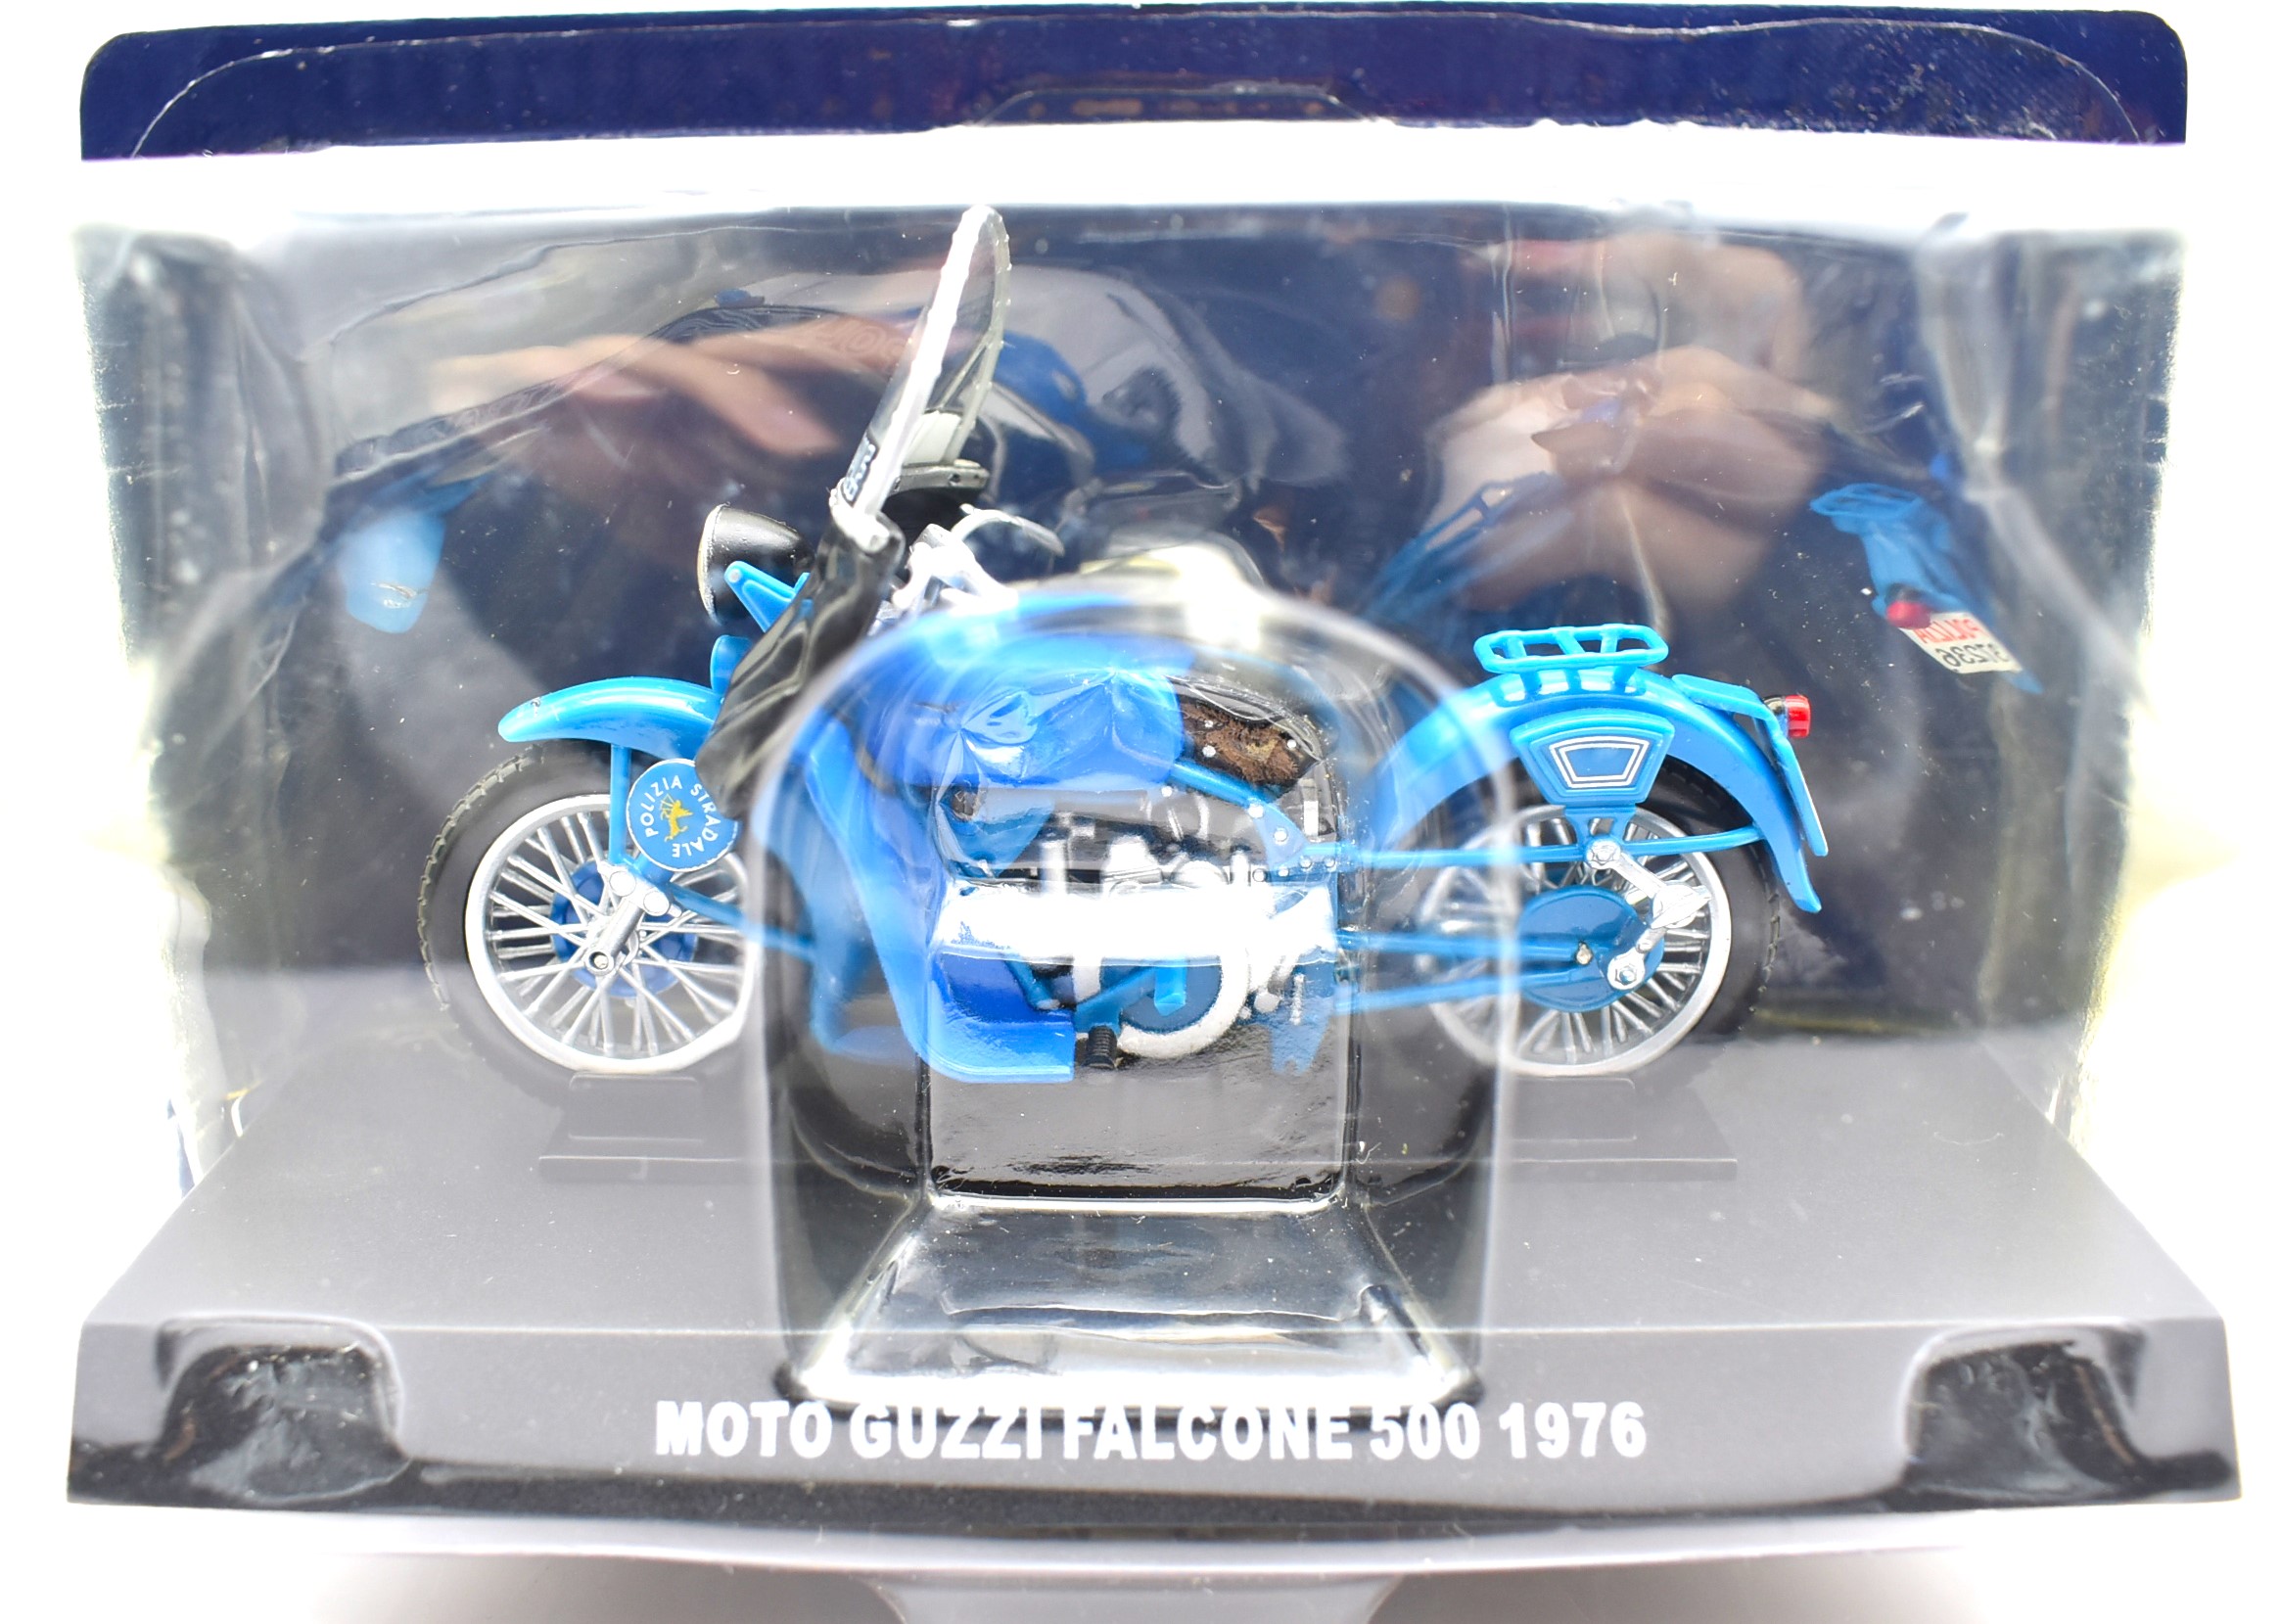 Miniatura Moto Guzzi Falcone